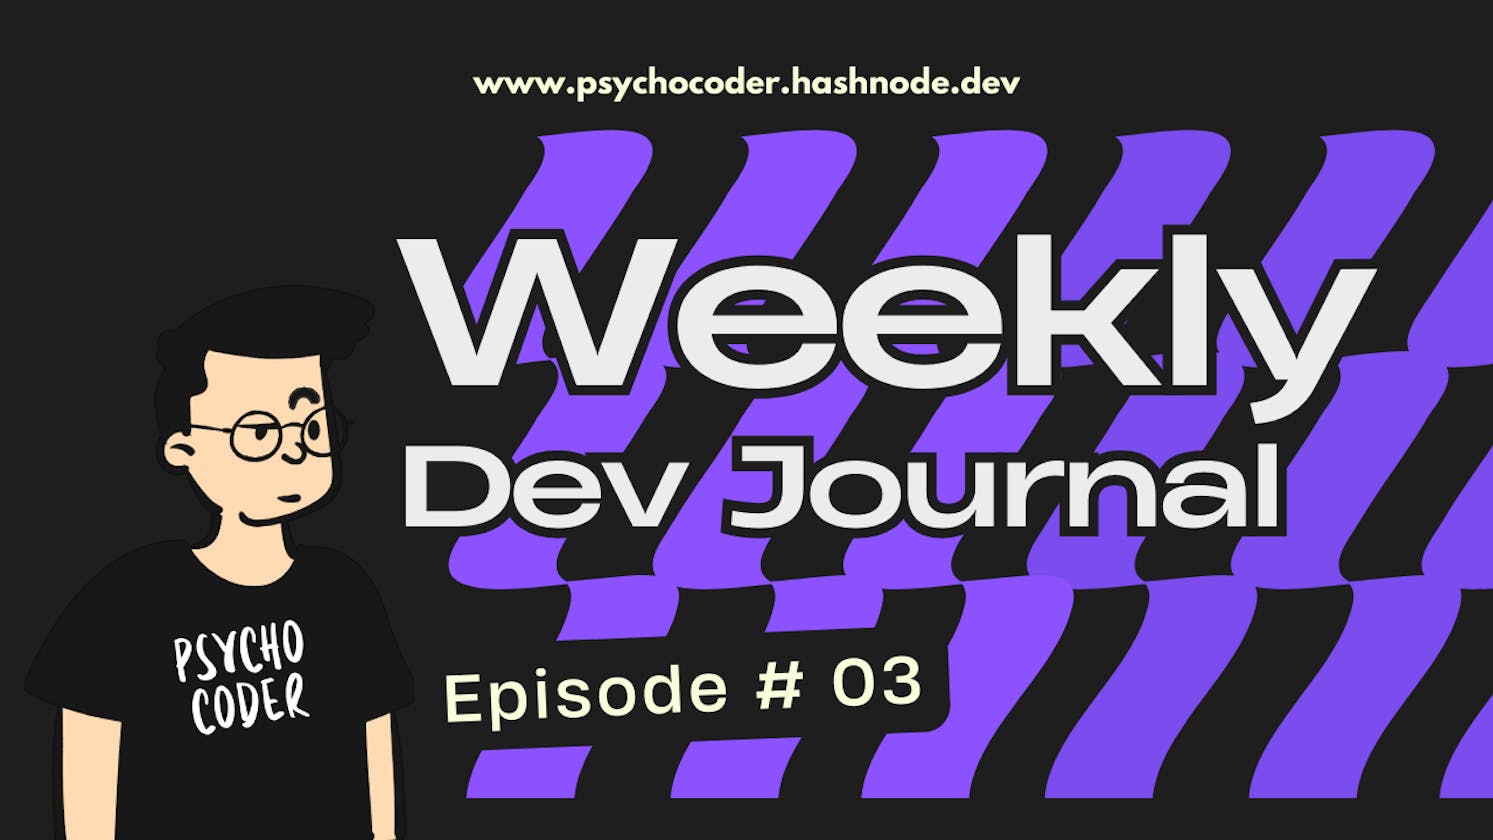 Weekly Dev Journal - Episode # 03